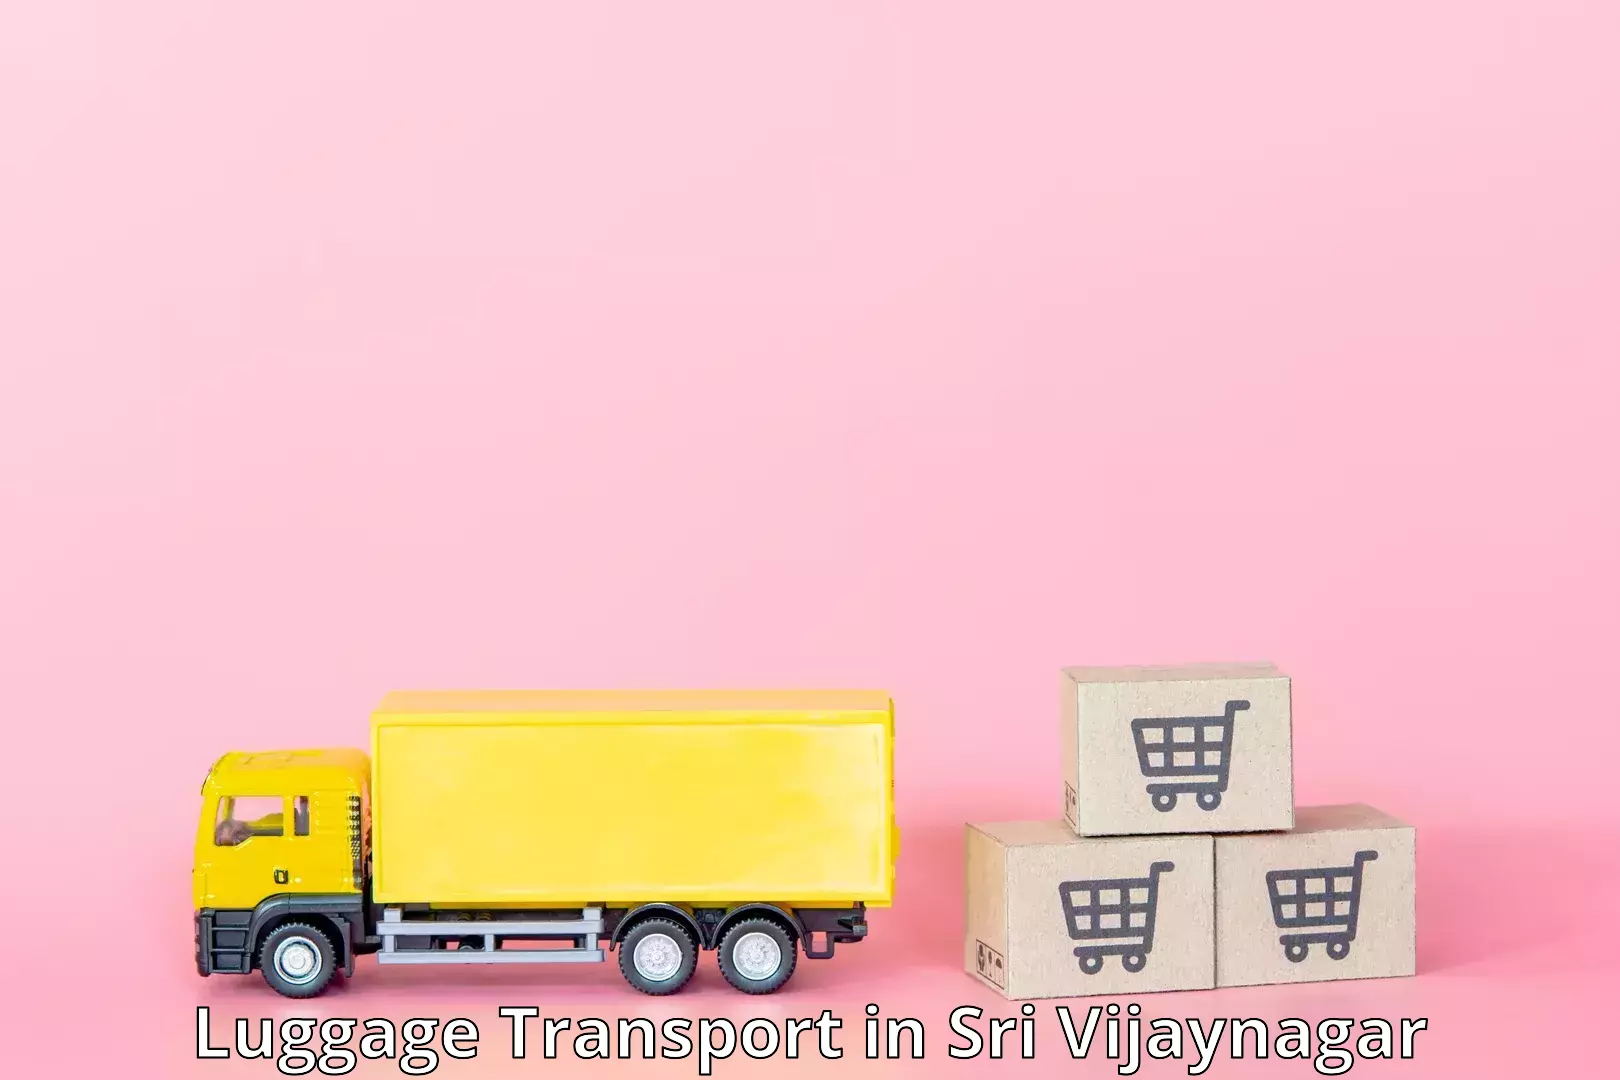 Luggage shipping logistics in Sri Vijaynagar